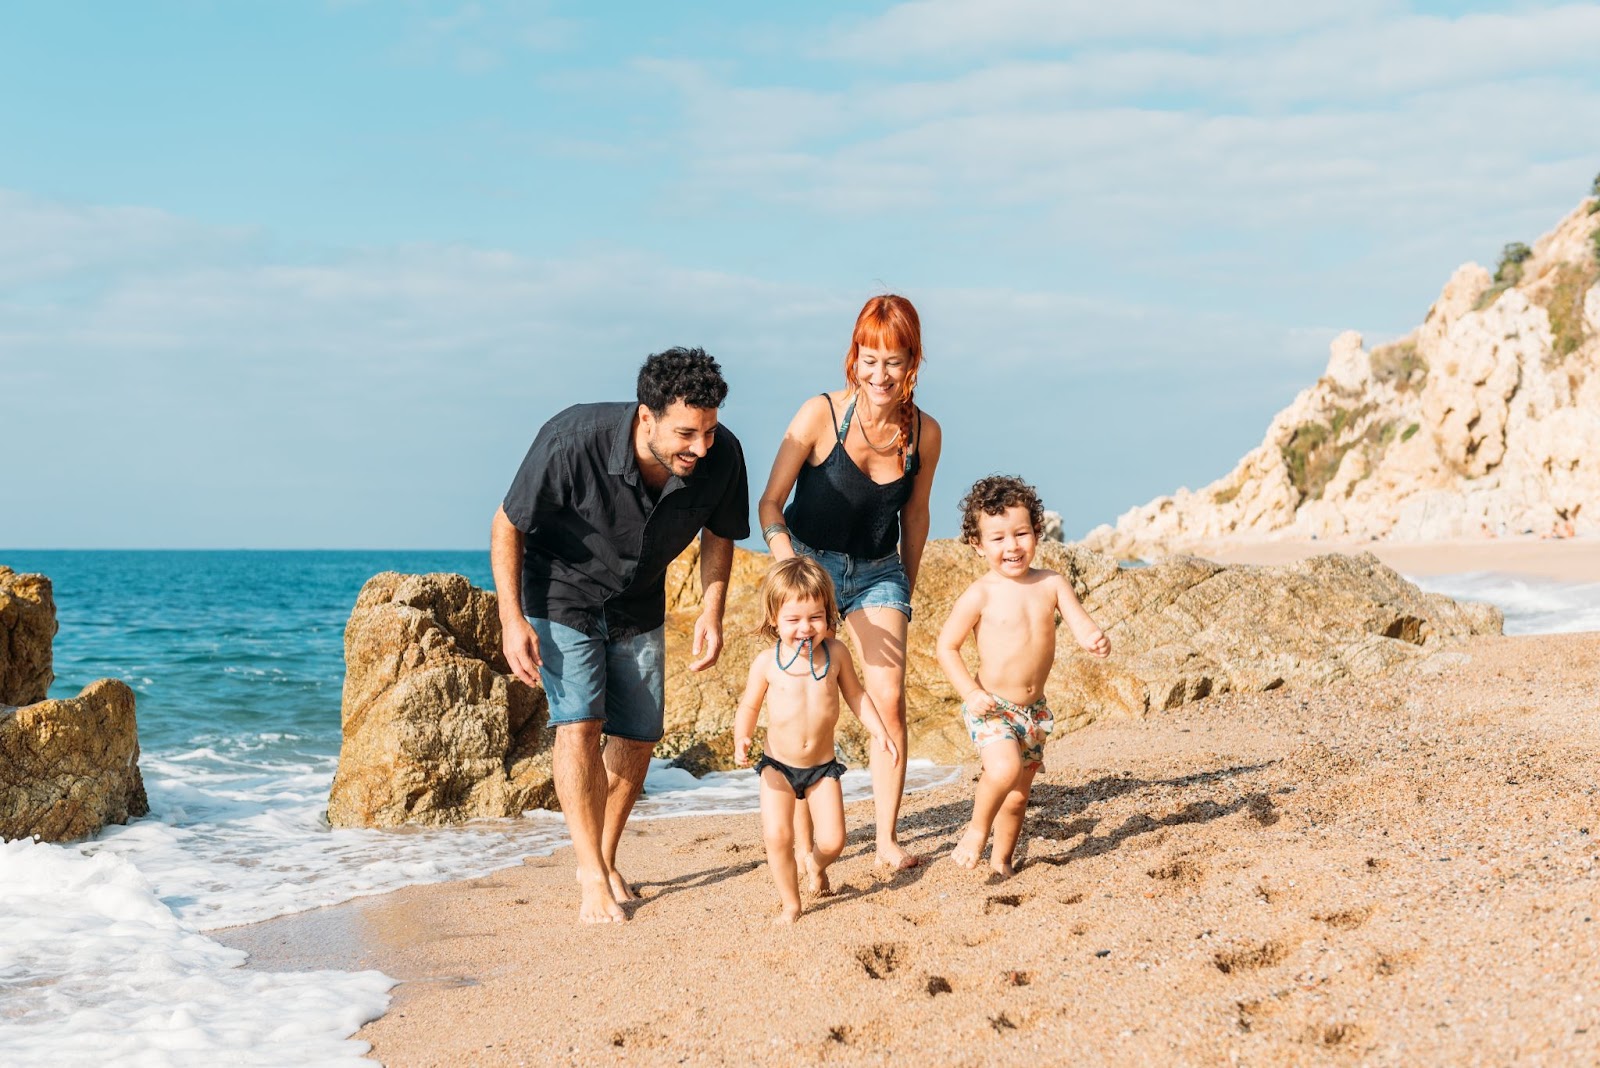 A happy family walking on a sandy beach.